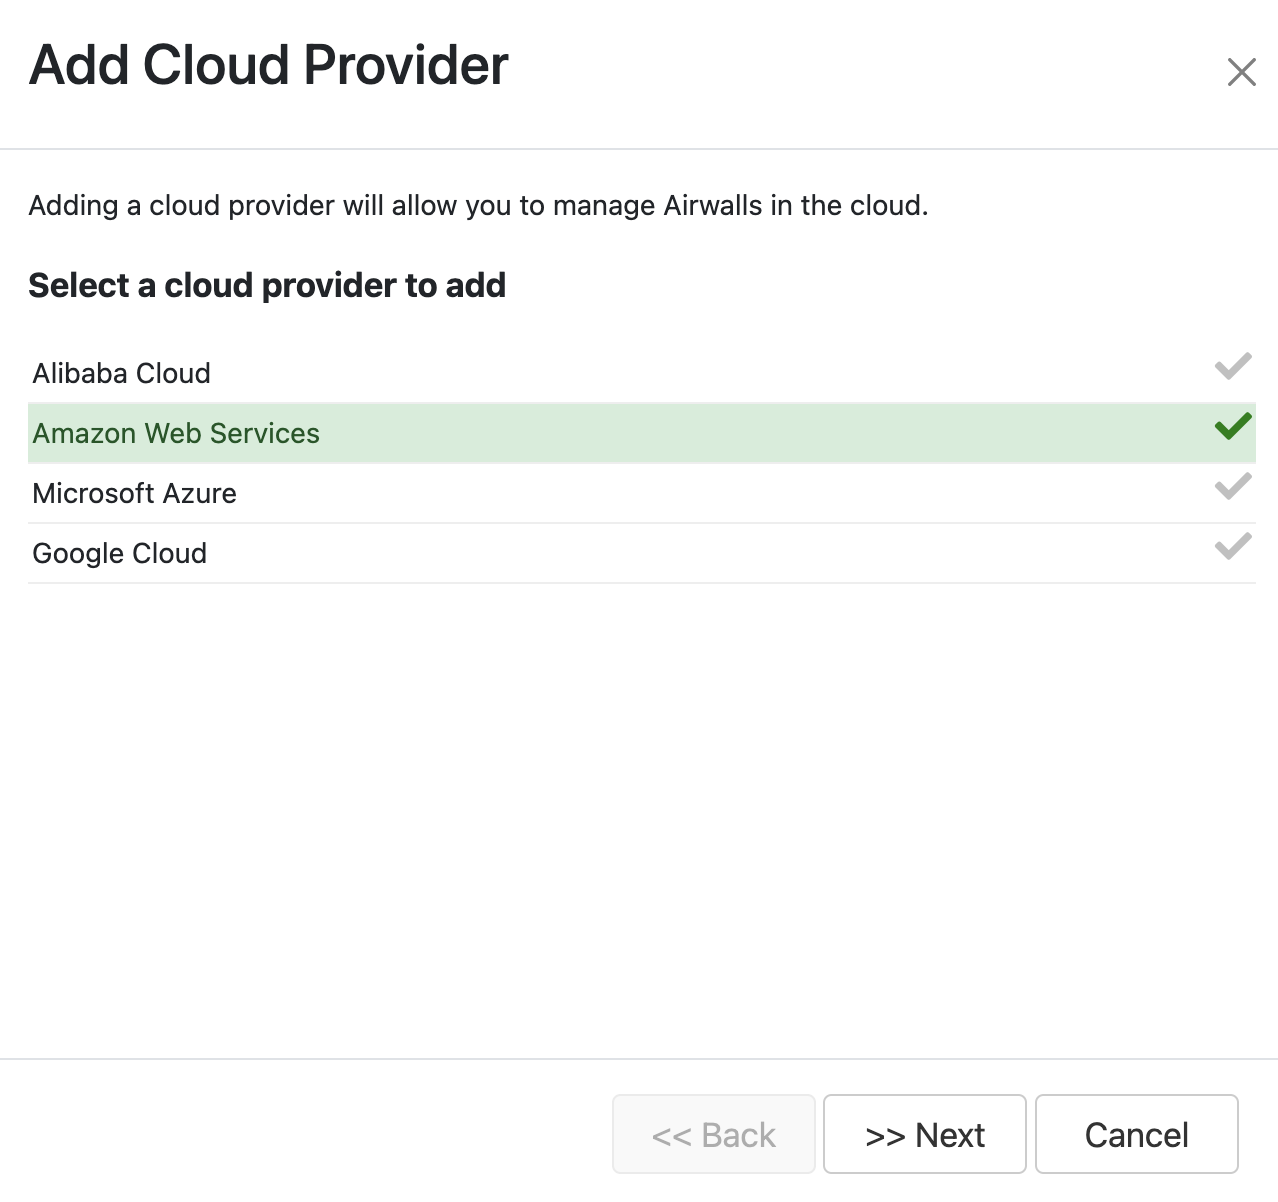 Add cloud provider dialog box